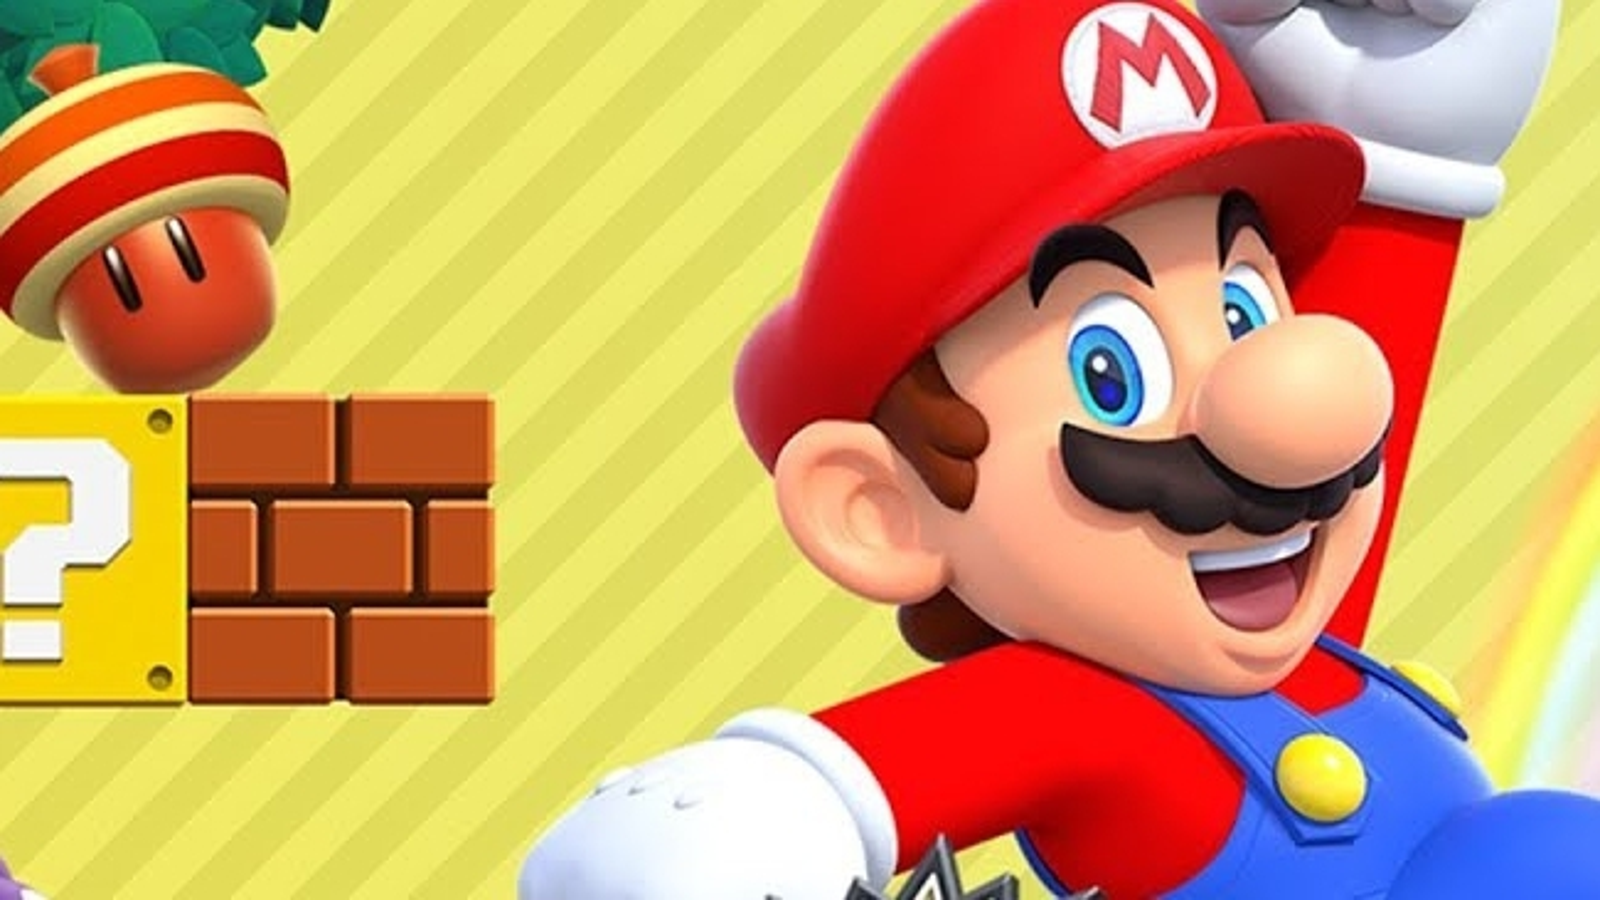 Guia de Ofertas   Brasil – New Super Mario Bros. U, Mortal